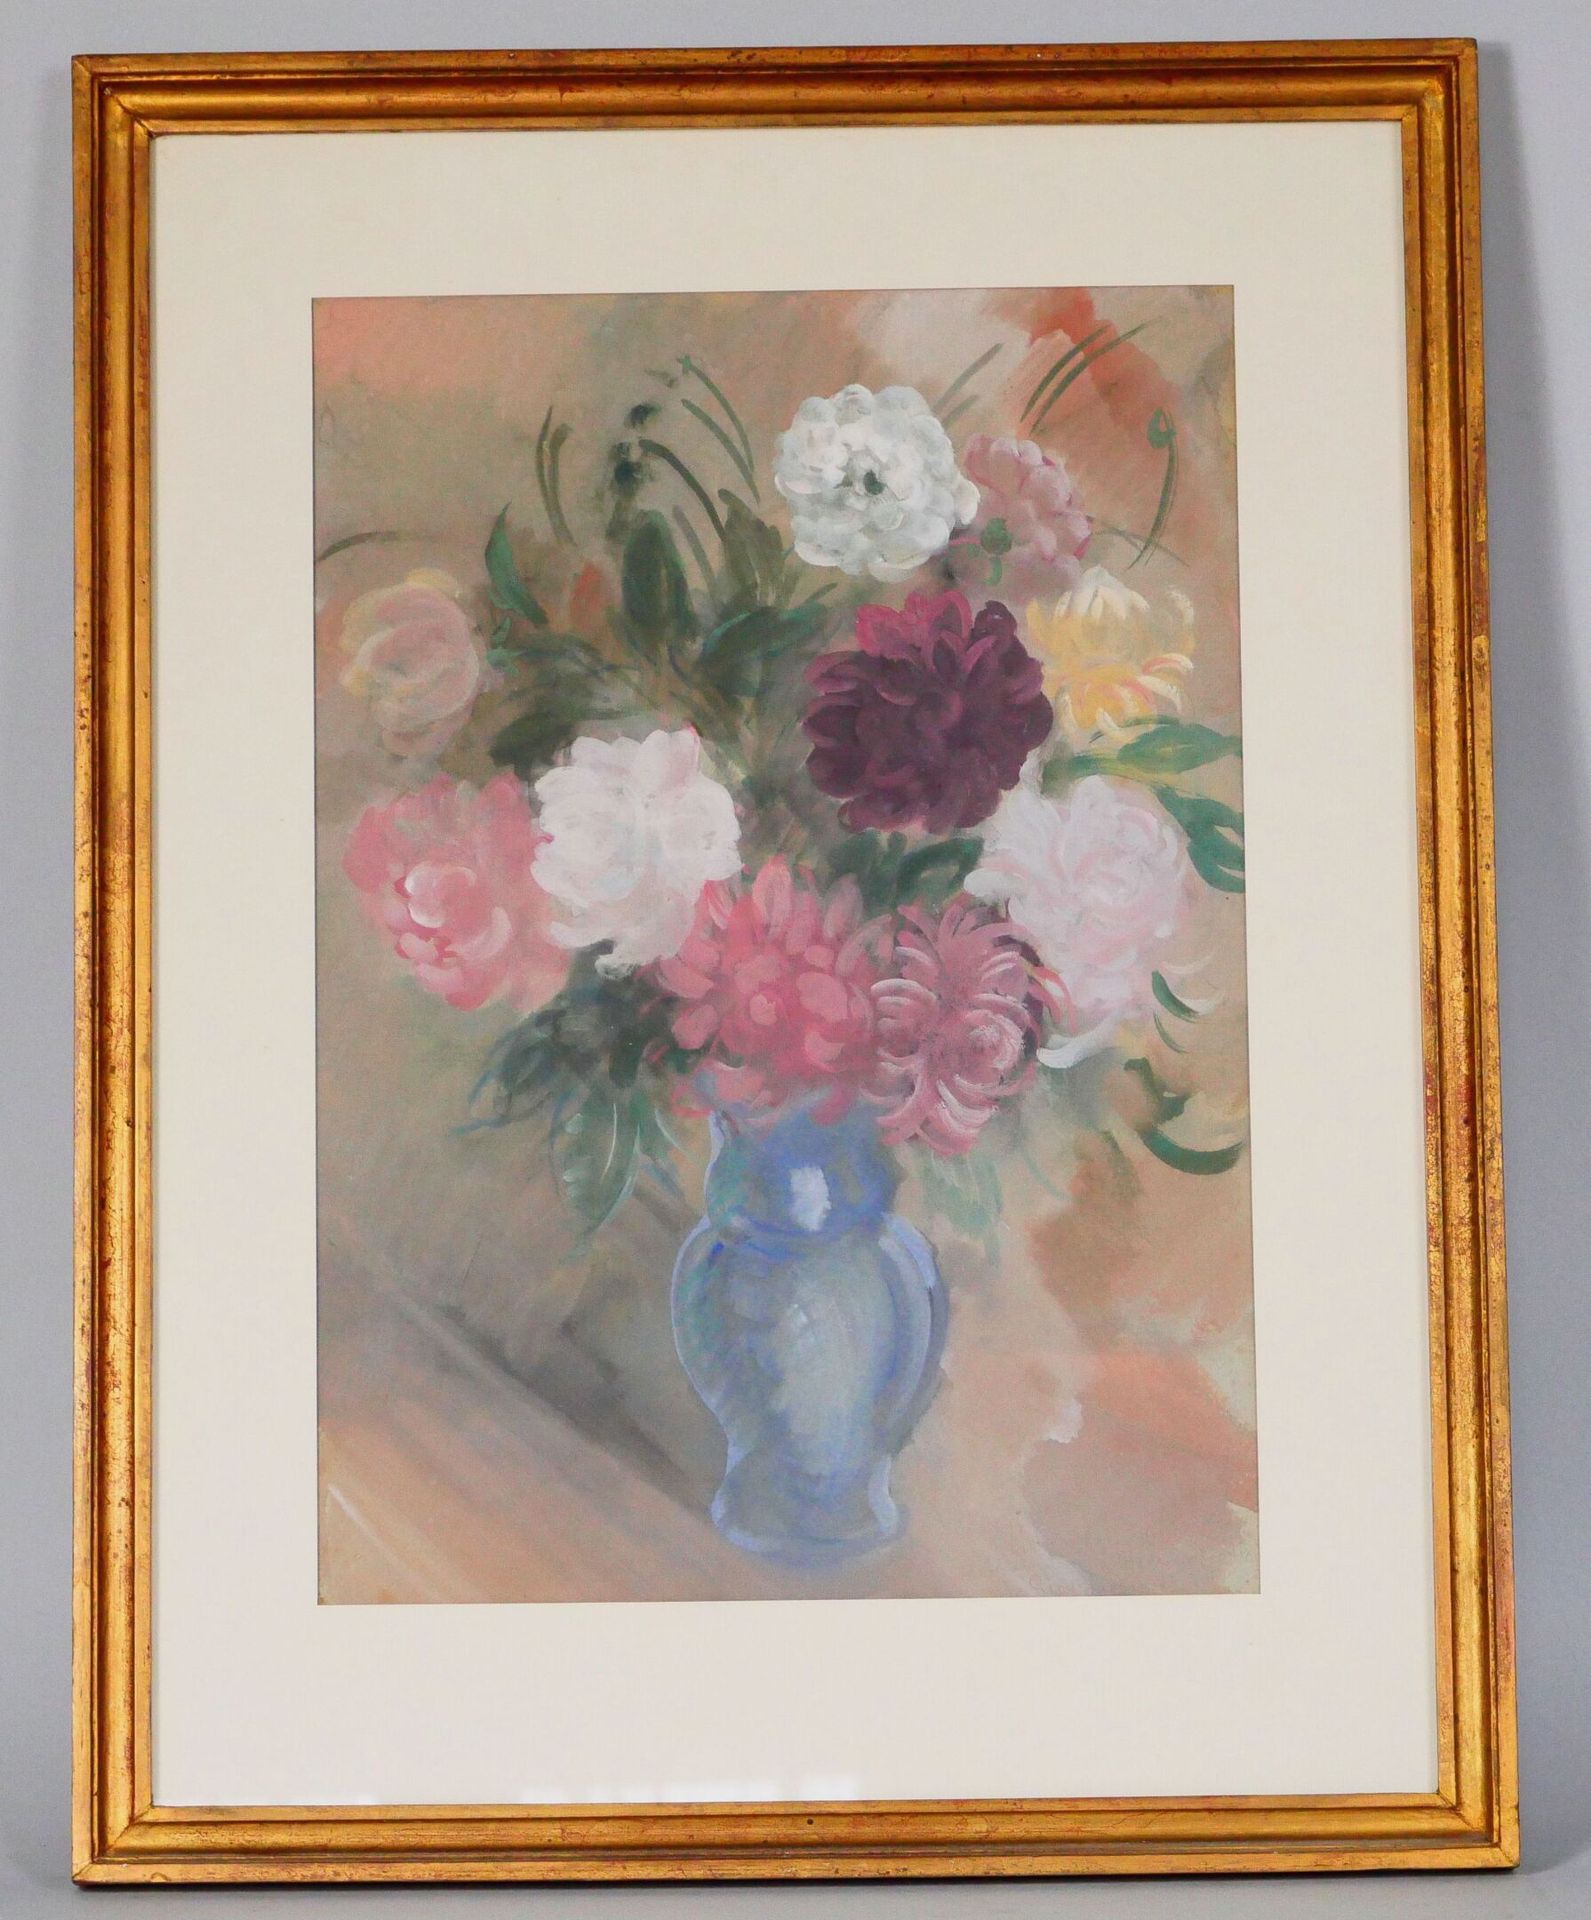 Null 乔瓦尼-莱纳迪 (1876-1957)
花瓶与大红花 
纸上水彩画，右下方有签名和日期
视线尺寸：45 x 31厘米 
带画框尺寸：63.5 x 48&hellip;